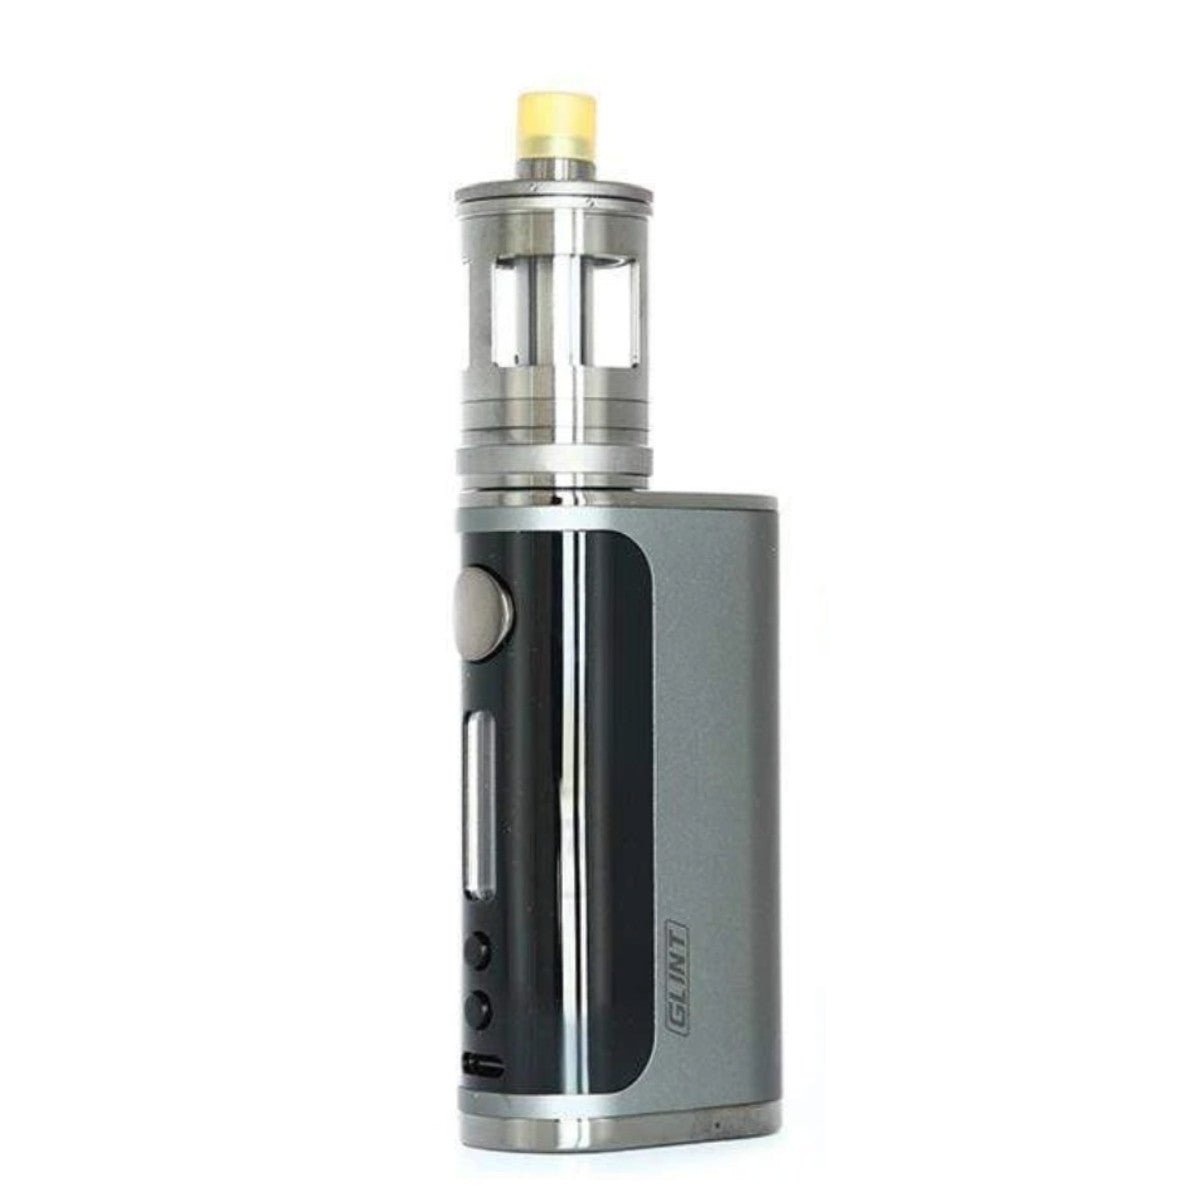 Nautilus GT High Power Starter Kit - E-Liquid, Vape, e-cigarette, vape pen, salt nic, 